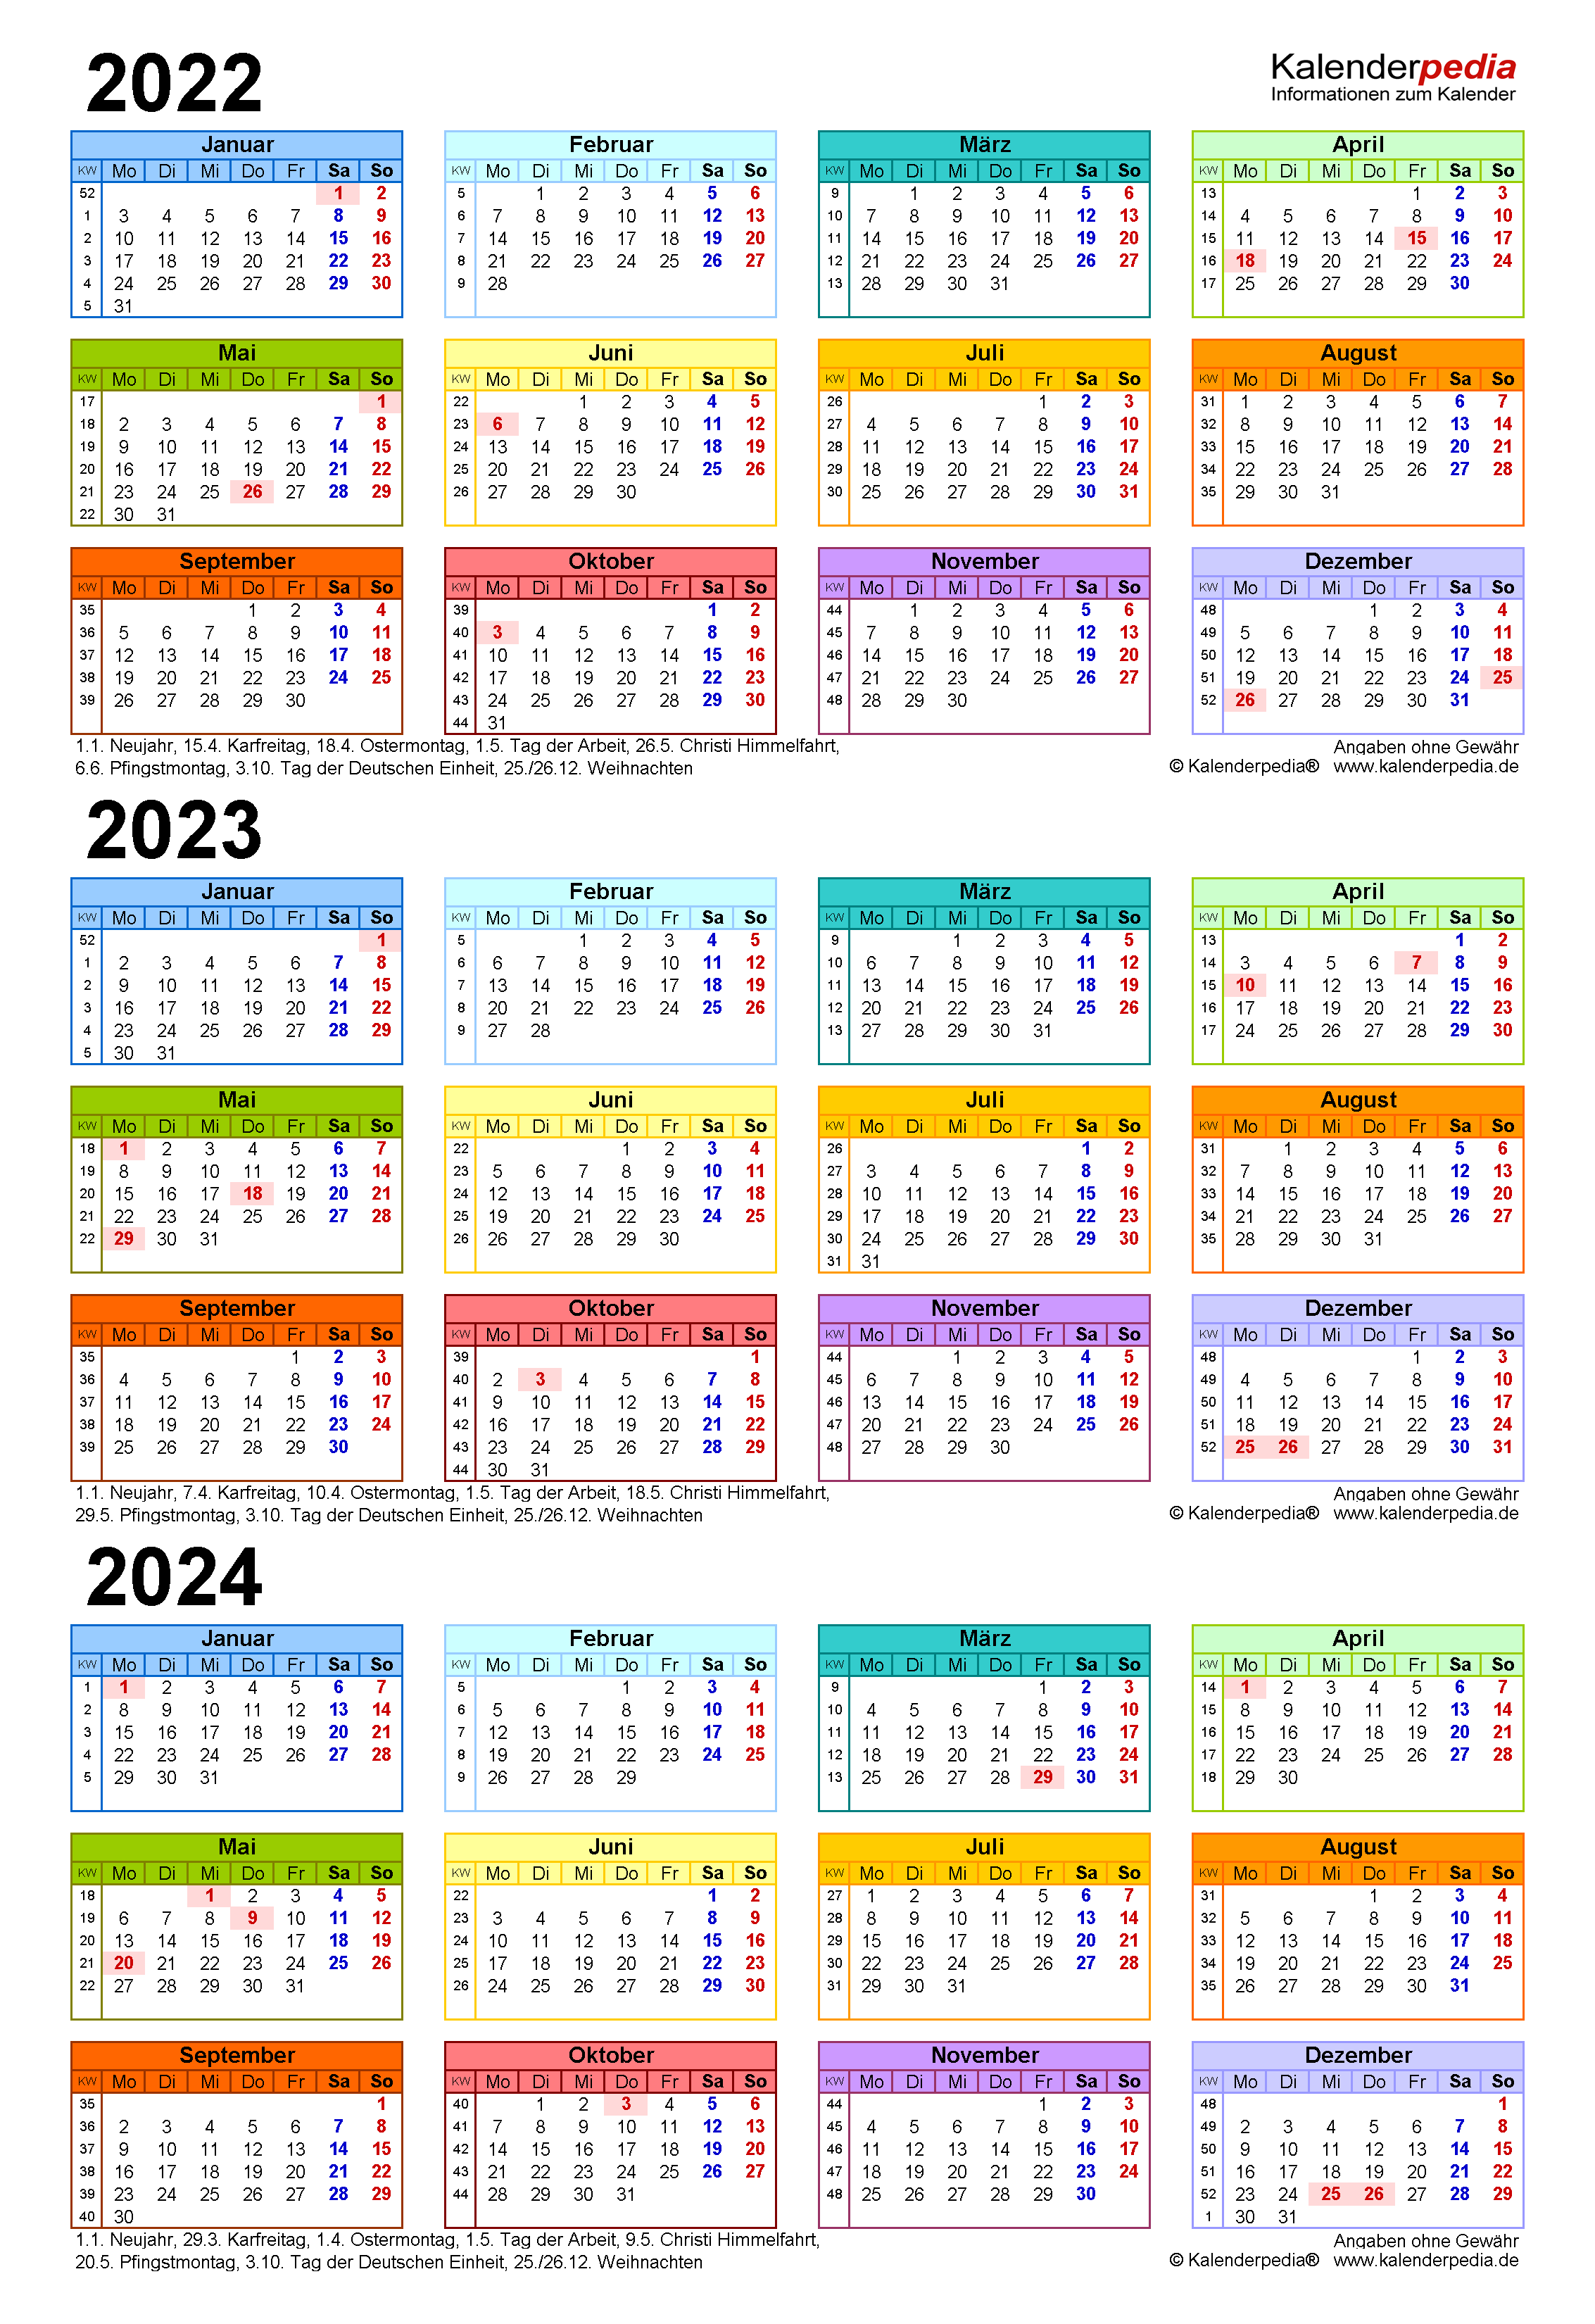 Kalender 2021 2024 Eenvoudige Kalender 2019 2020 2021 2022 2023